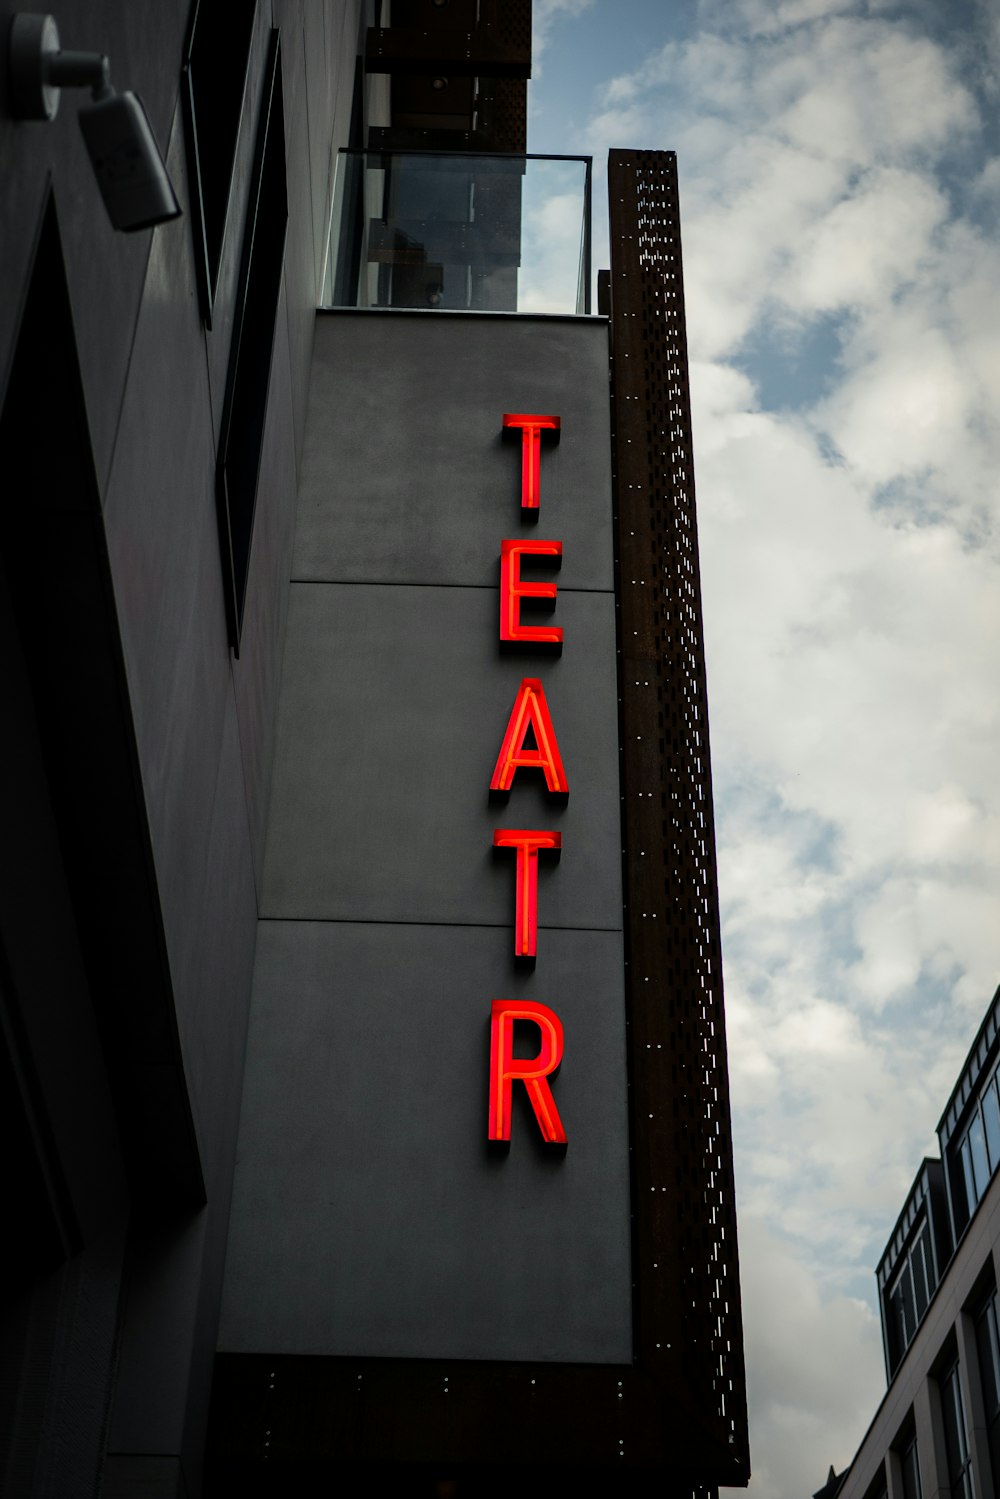 Teatr sign